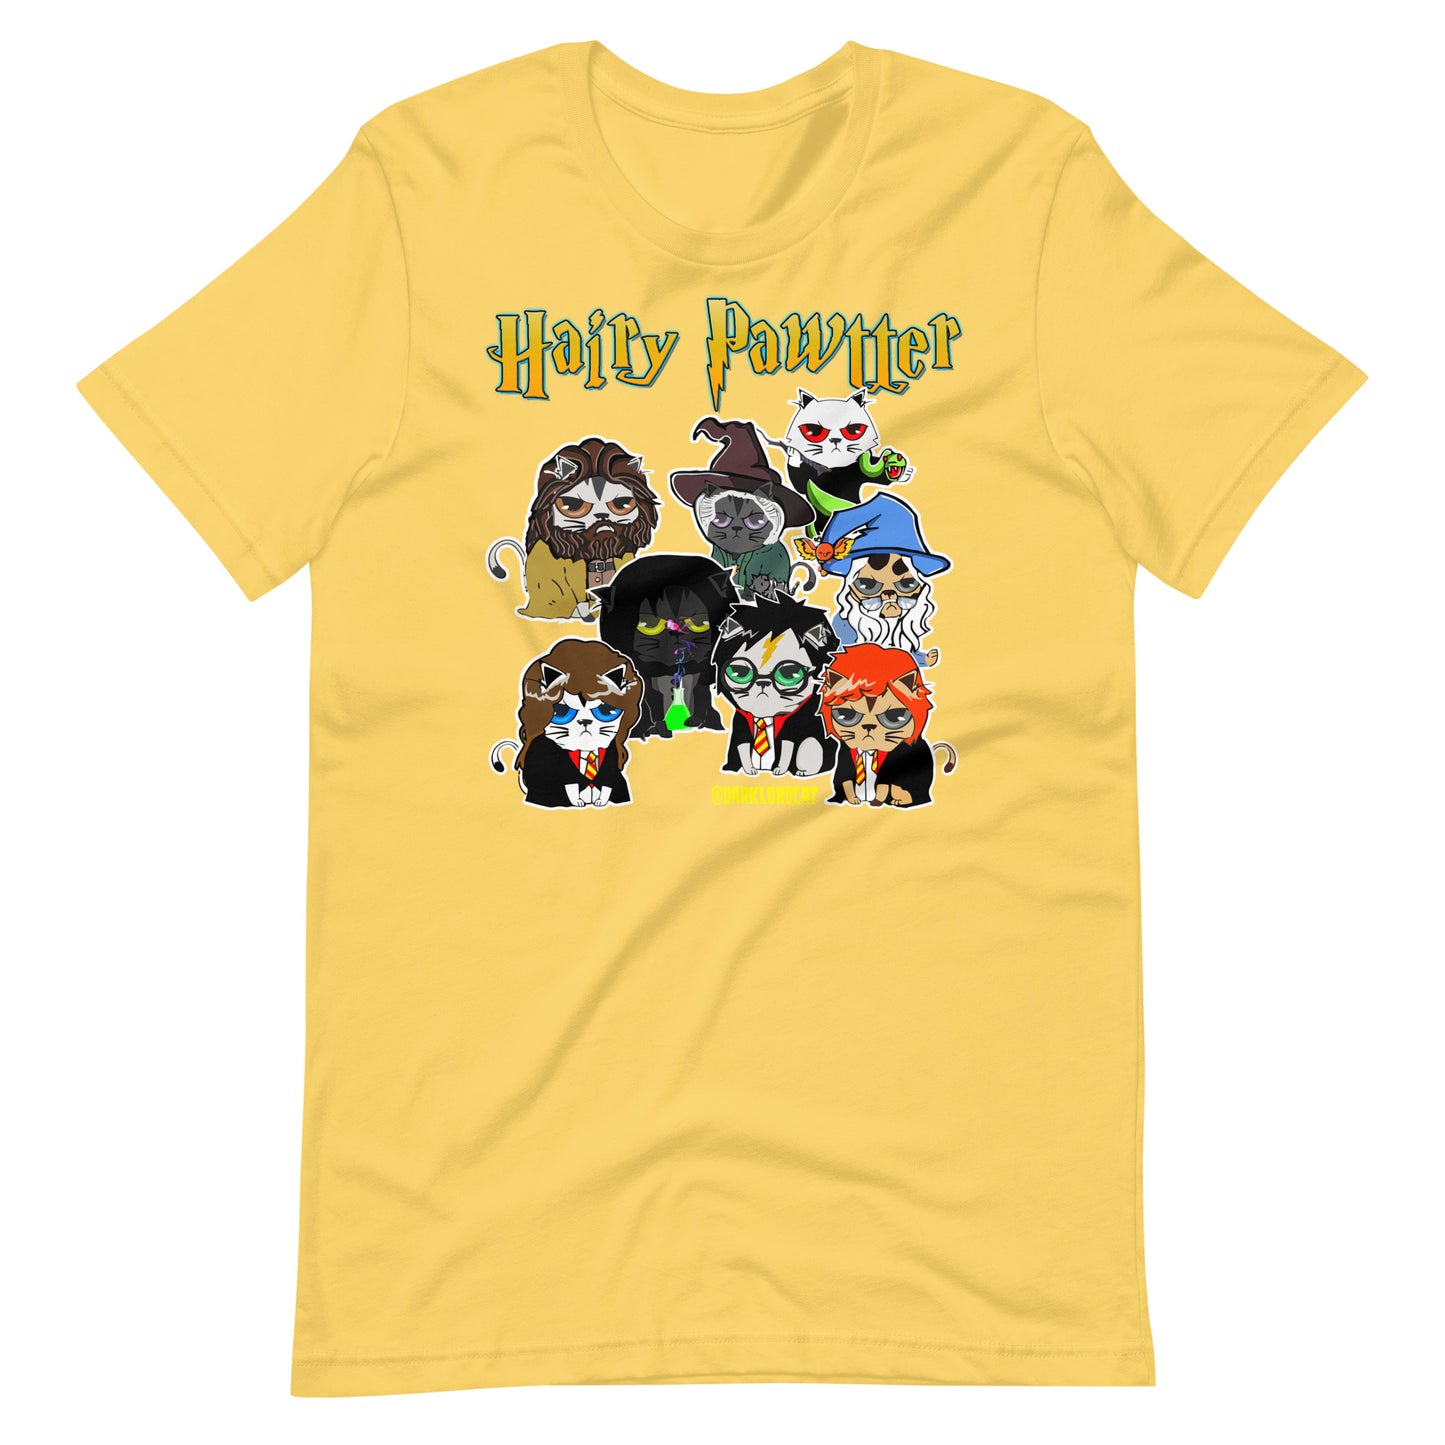 Hairy Pawtter Unisex T-Shirt